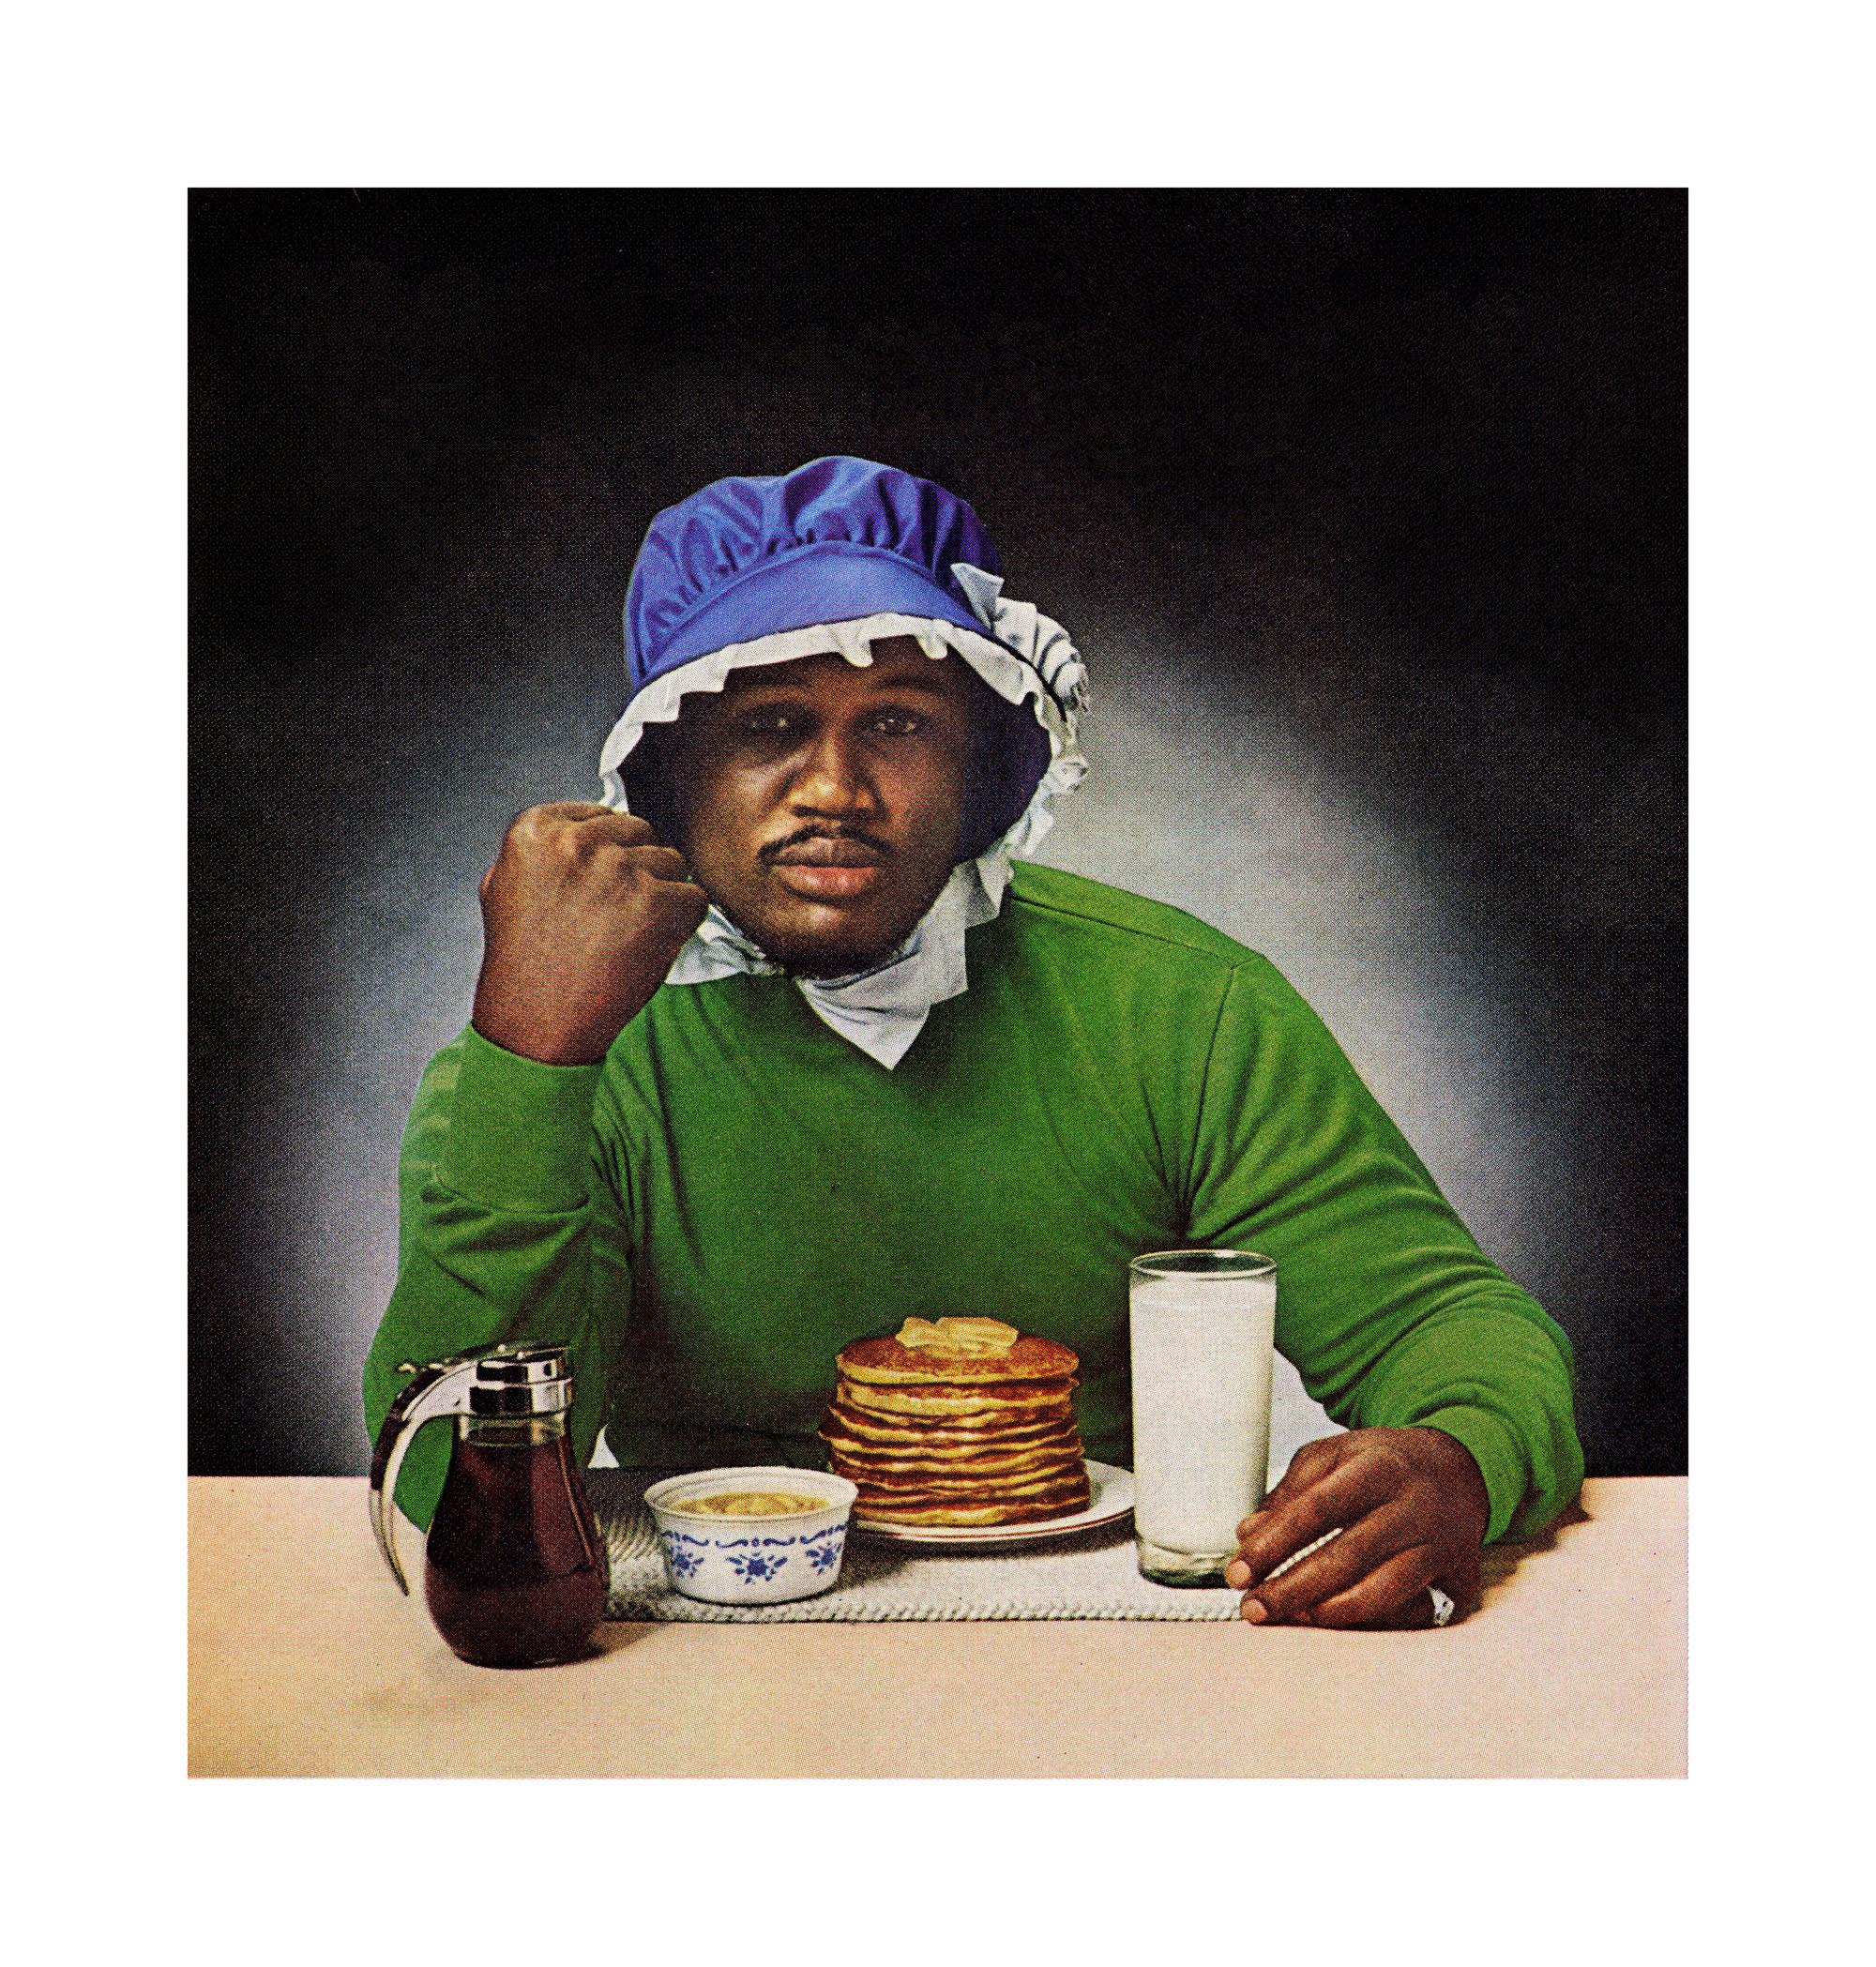 Hank Willis Thomas, Smokin Joe Ain’t J’Mama, 1978/2006, from Unbranded: Reflections in Black by Corporate America. LightJet color print.